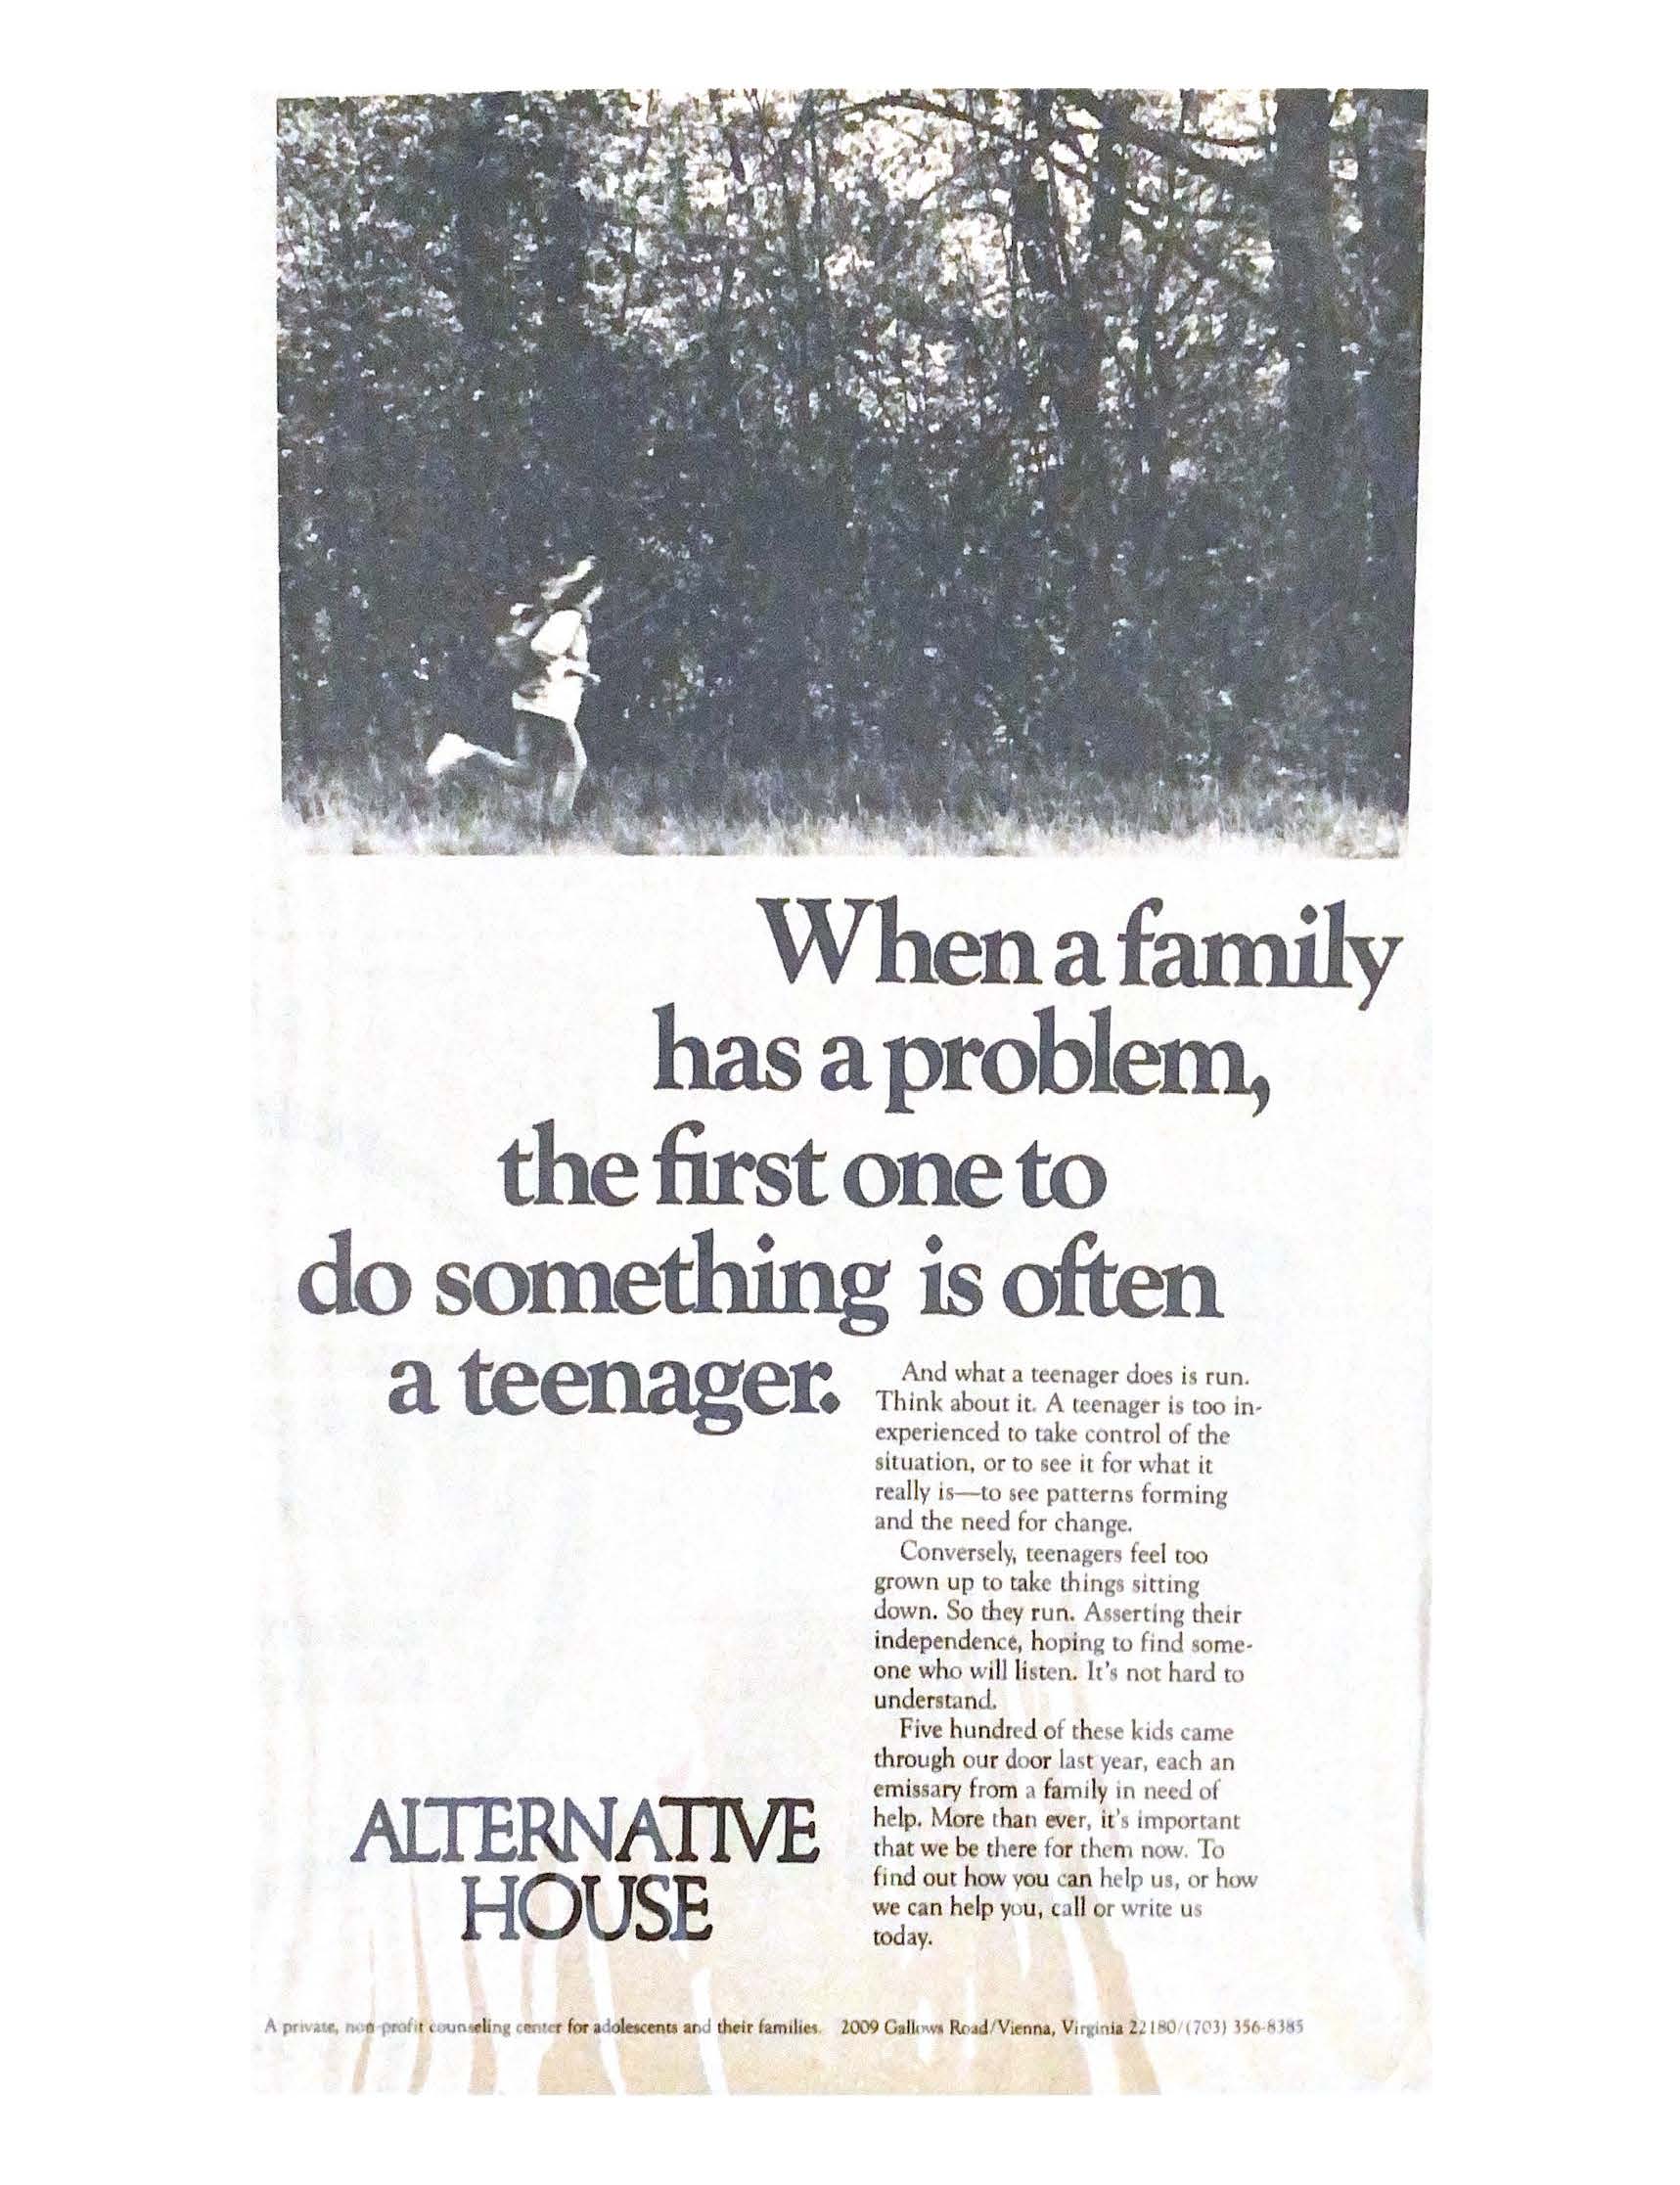 1991 AH Newspaper Ad